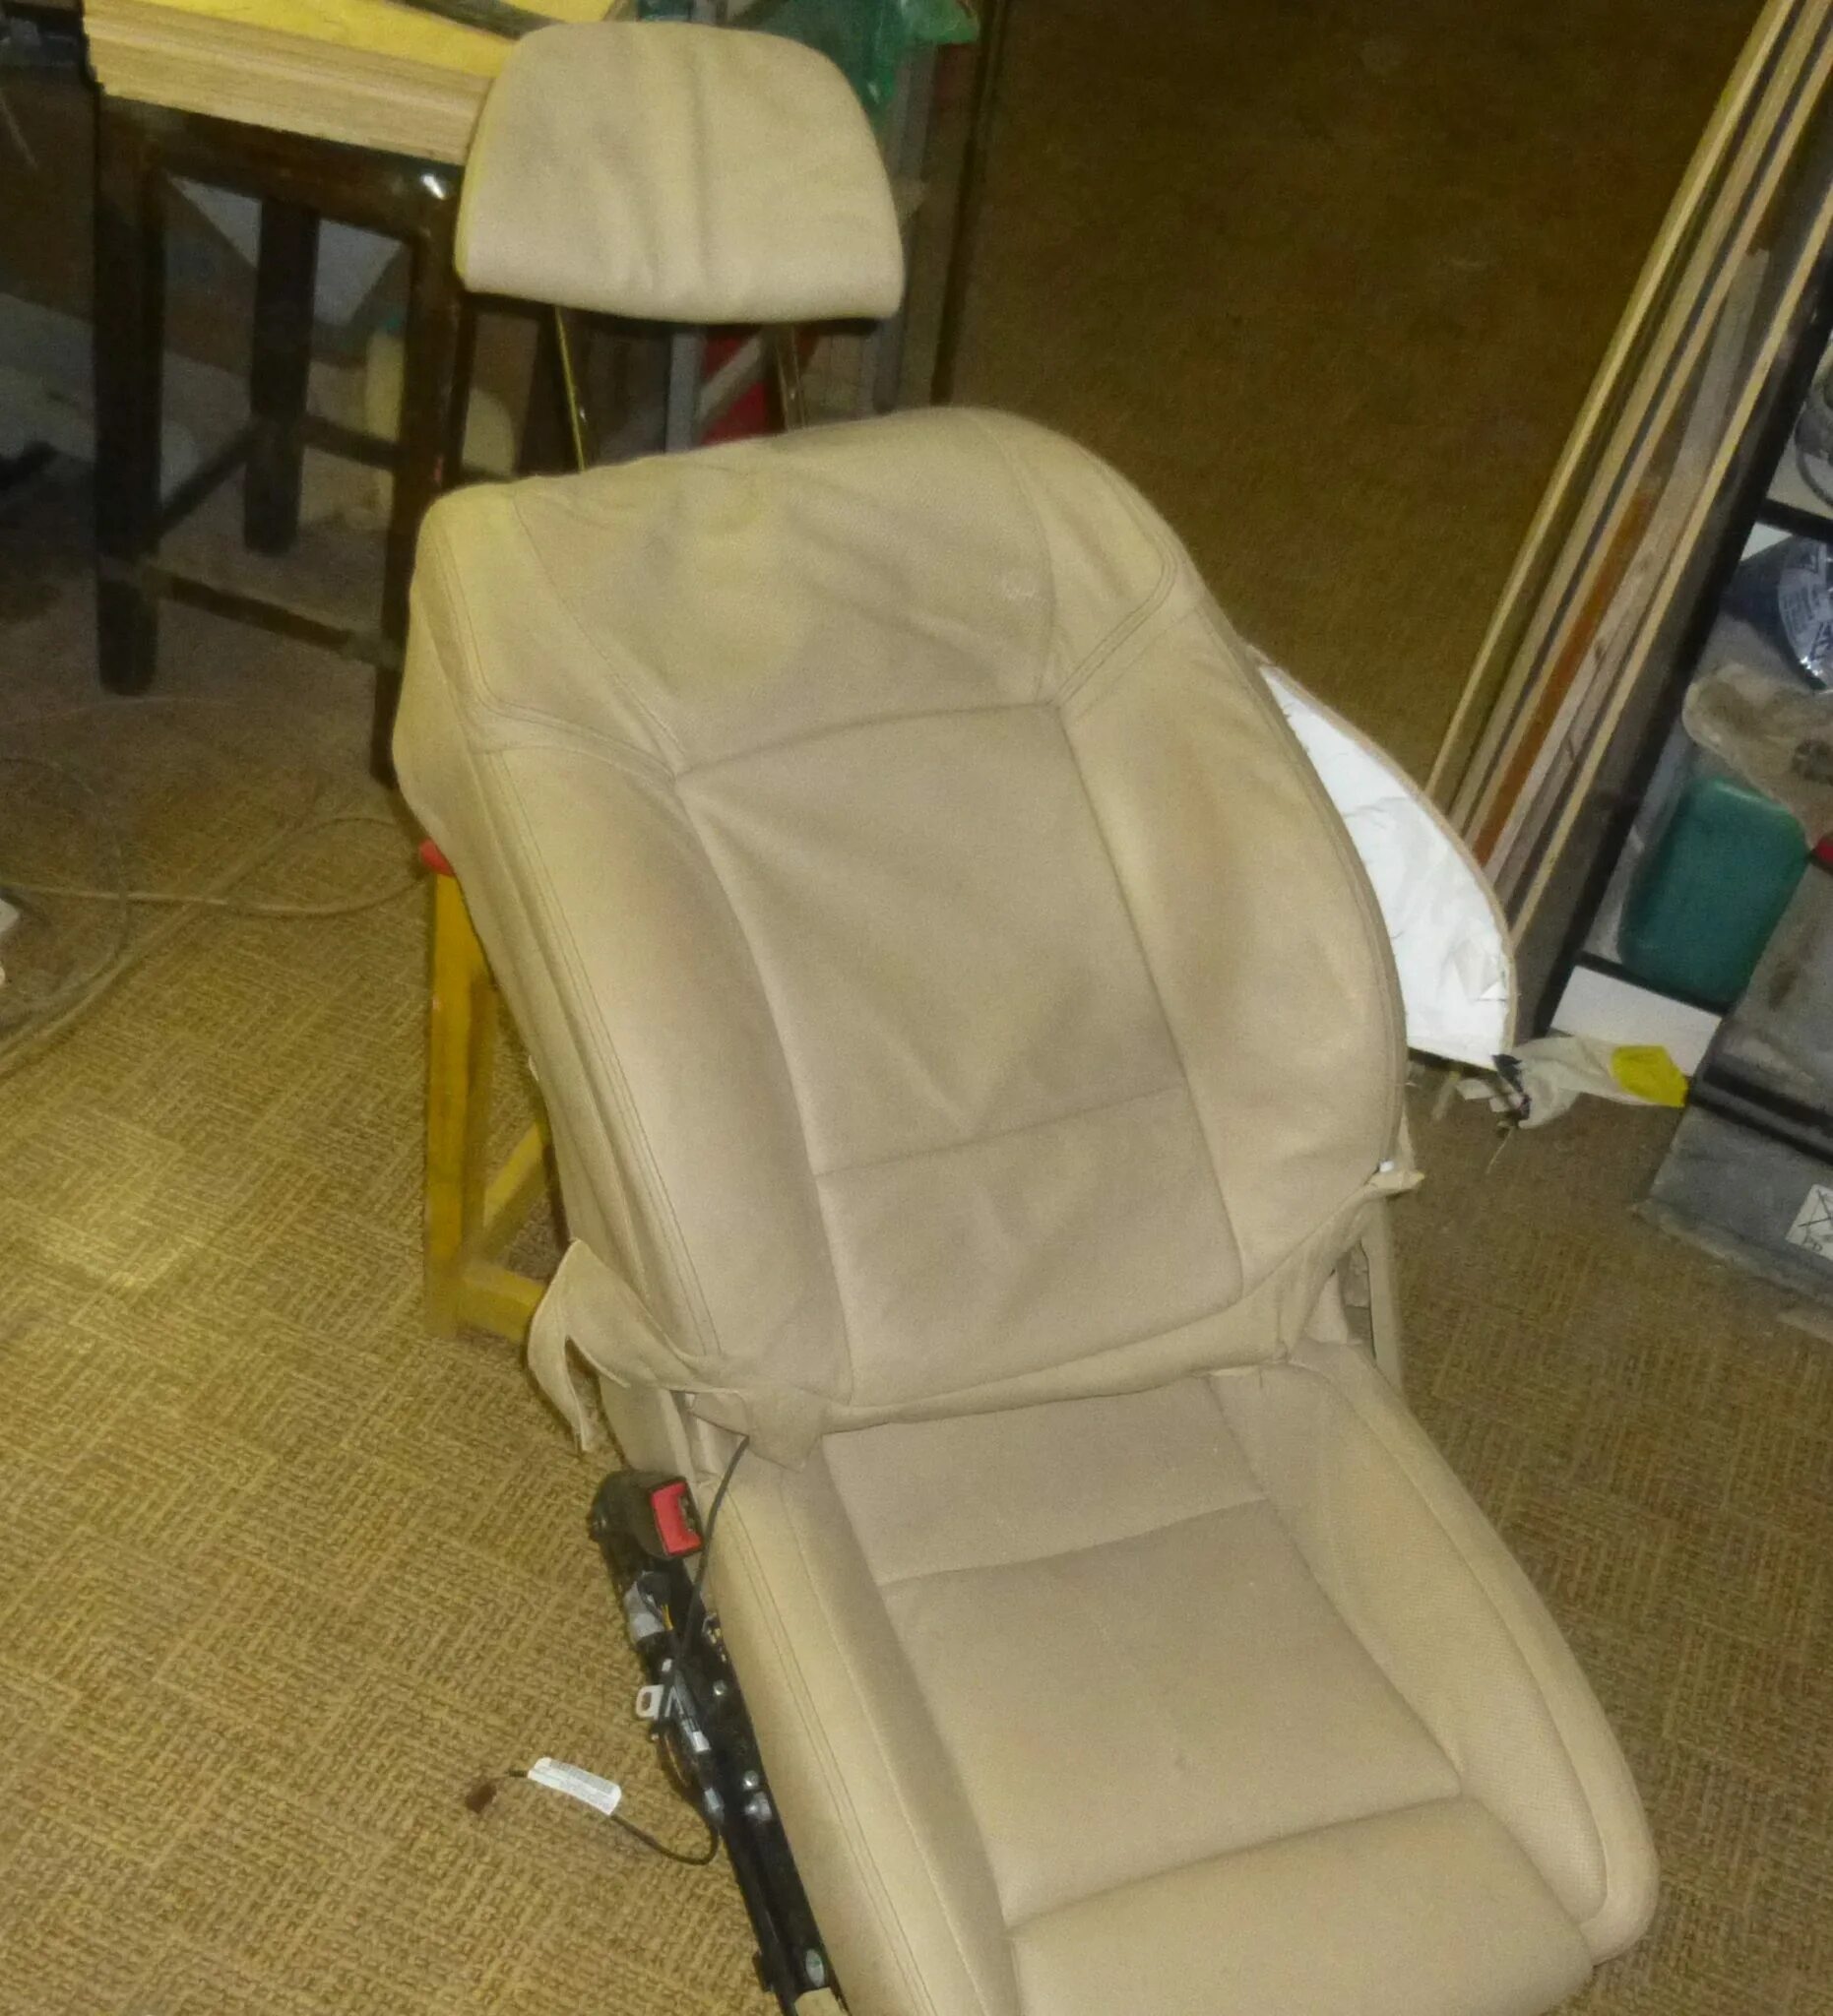 Ремонт сидушек. Перешив сидений Моторспорт е34. Обивка сидений КАМАЗ. Реставрация кресла. Чехол для сушки сидений после химчистки.